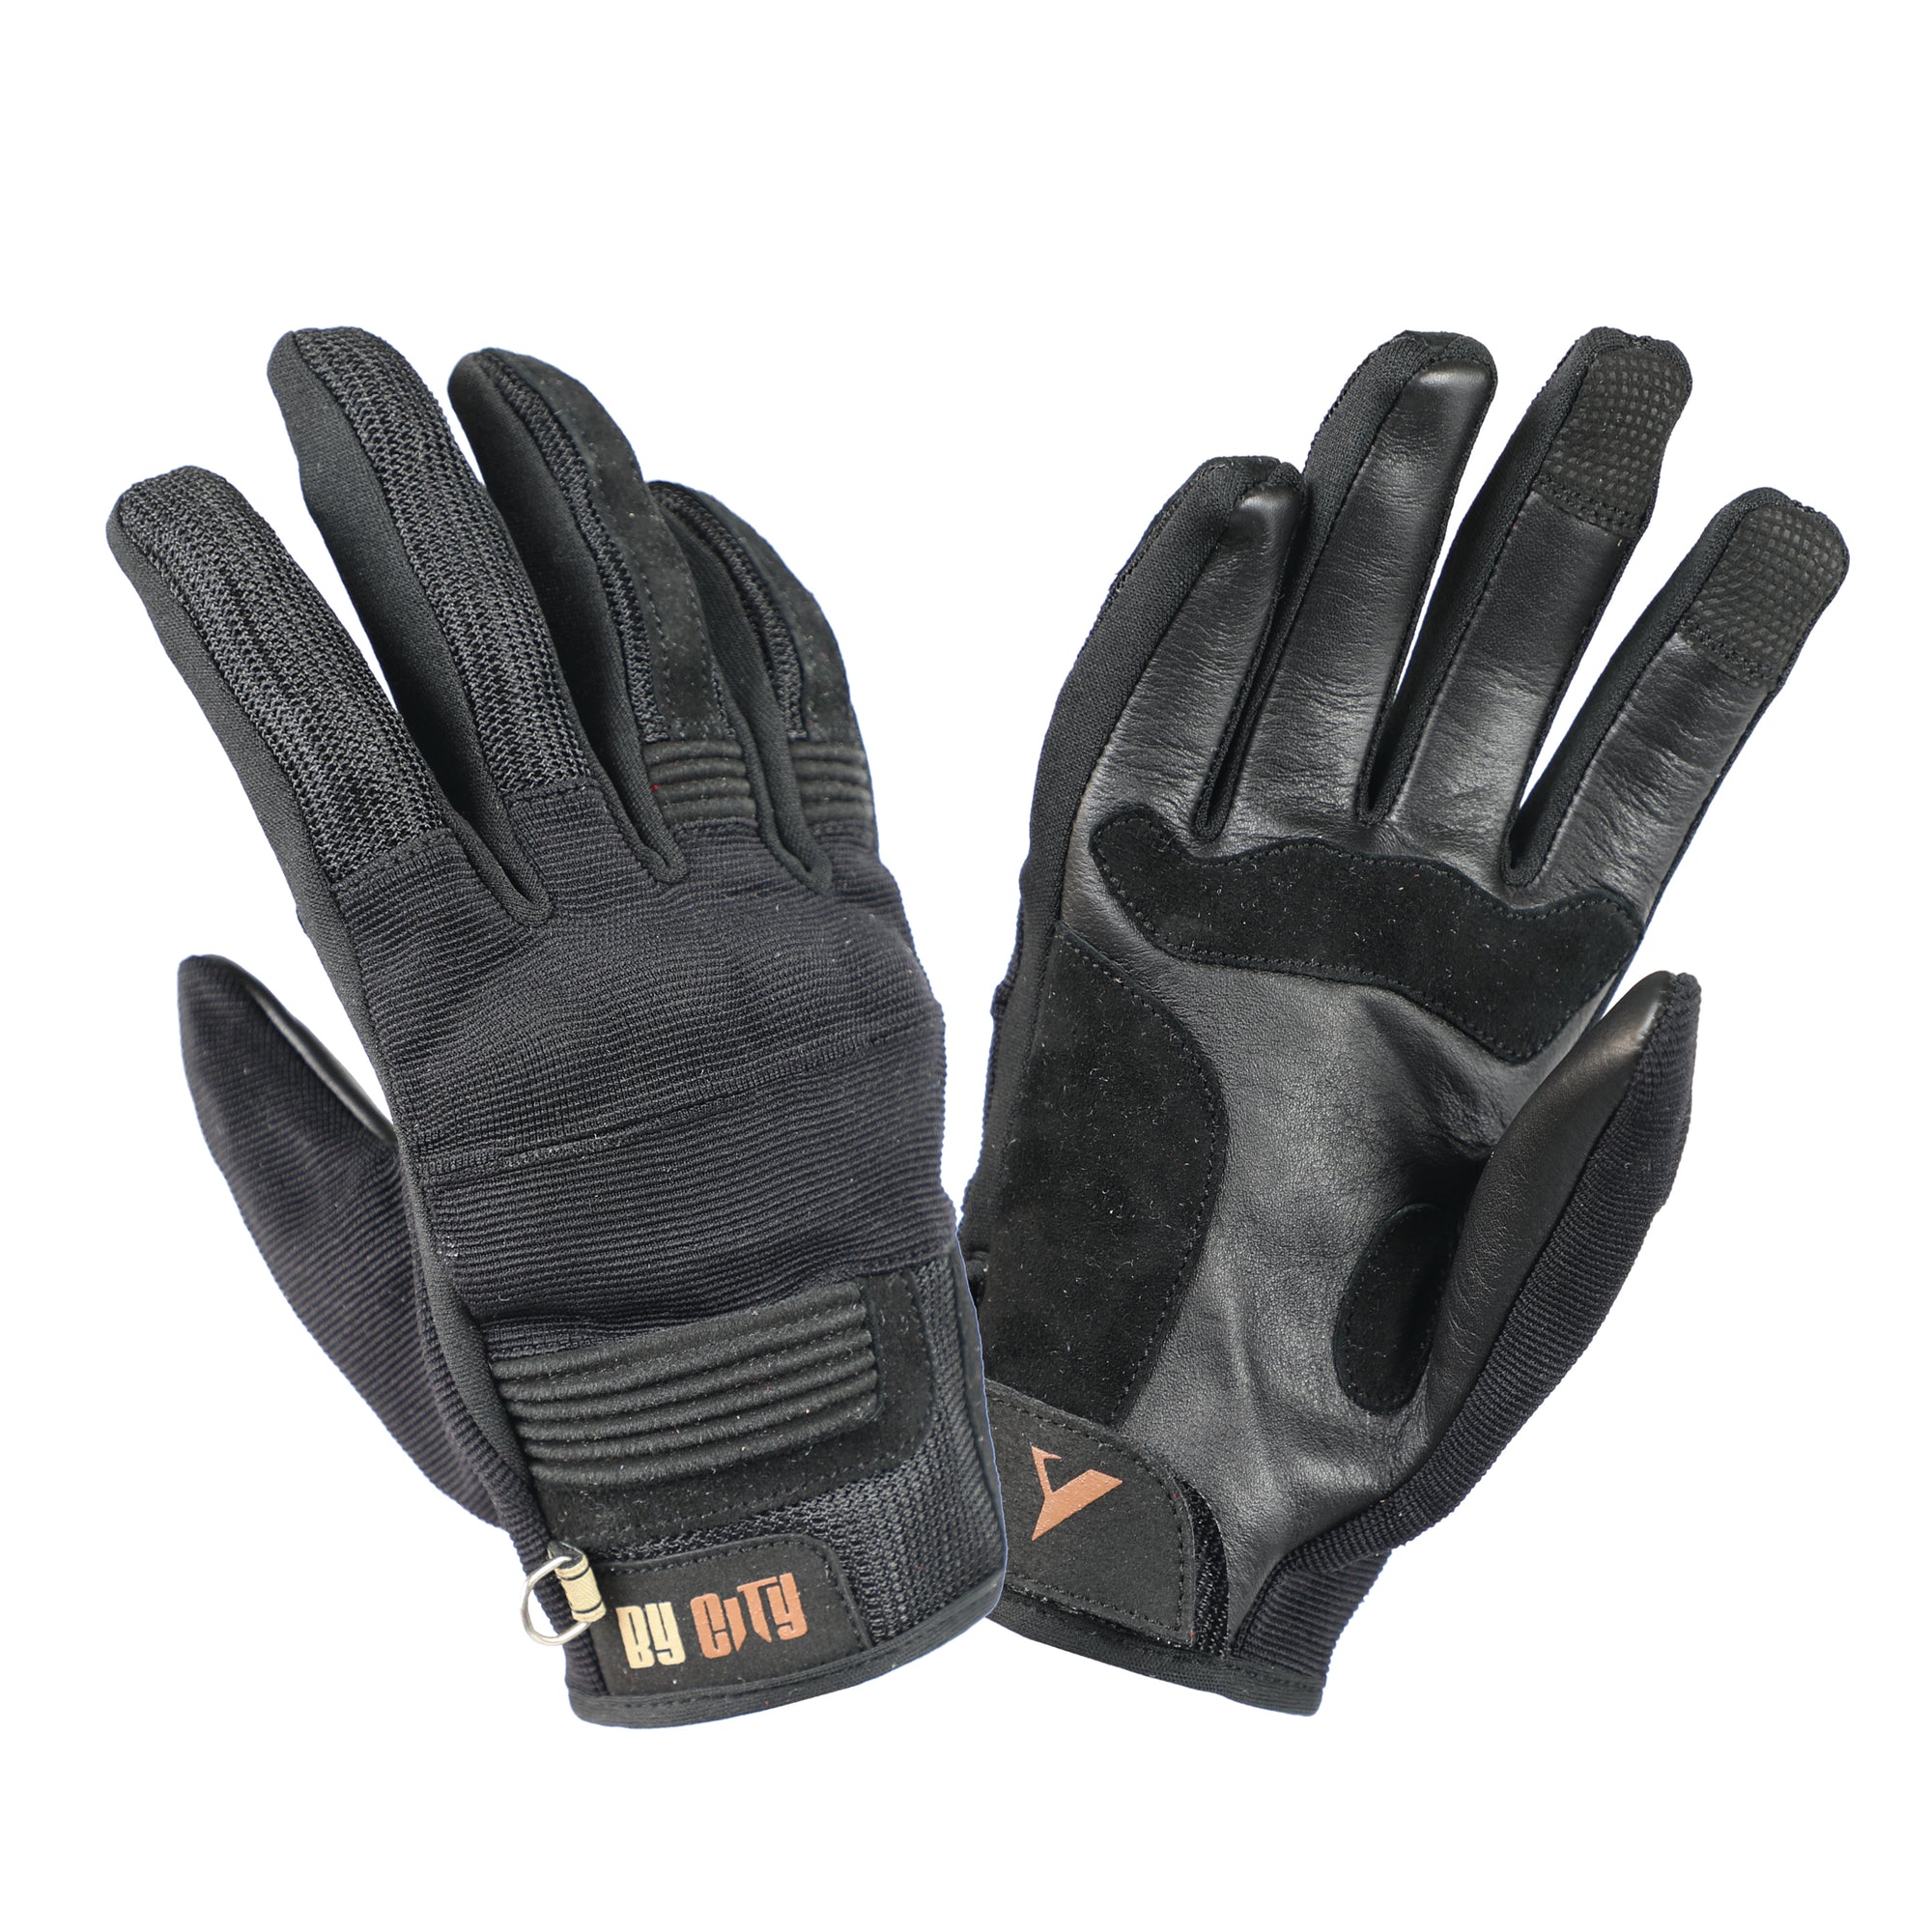 ByCity Florida SE Men's Gloves Black - Salt Flats Clothing